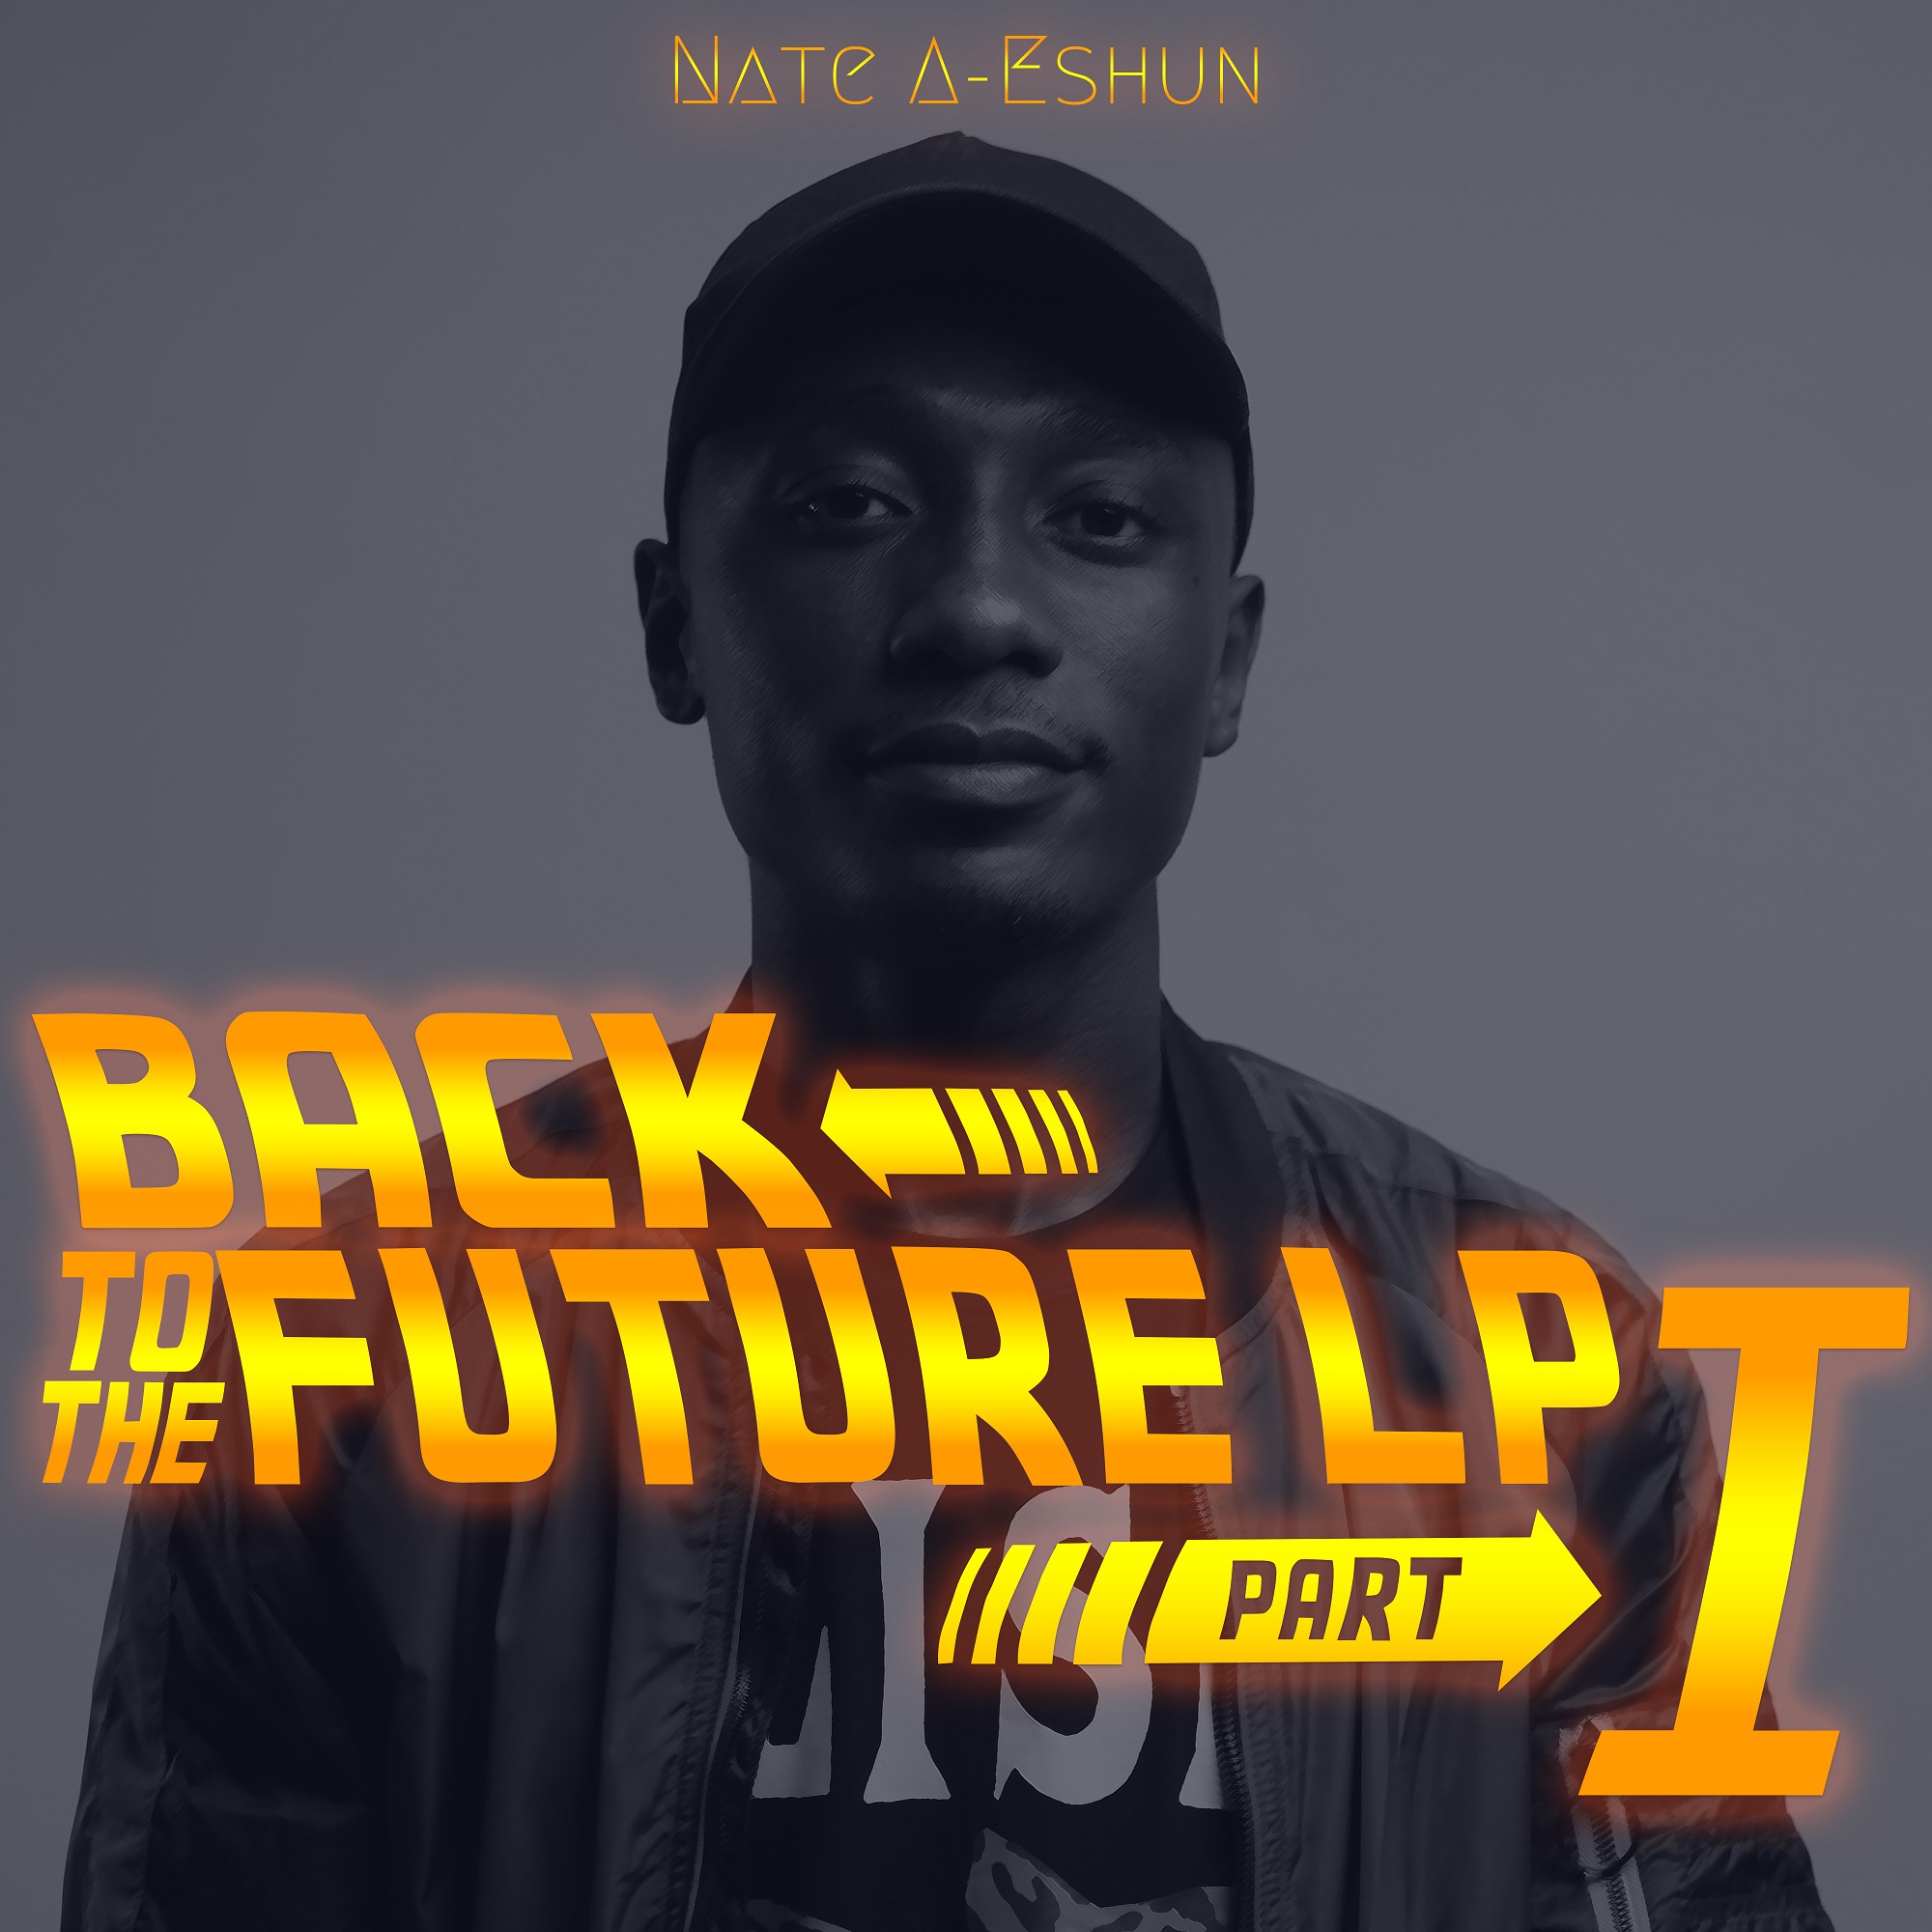 Nate A-Eshun unveils “Back 2 Da Future” album with video documentary